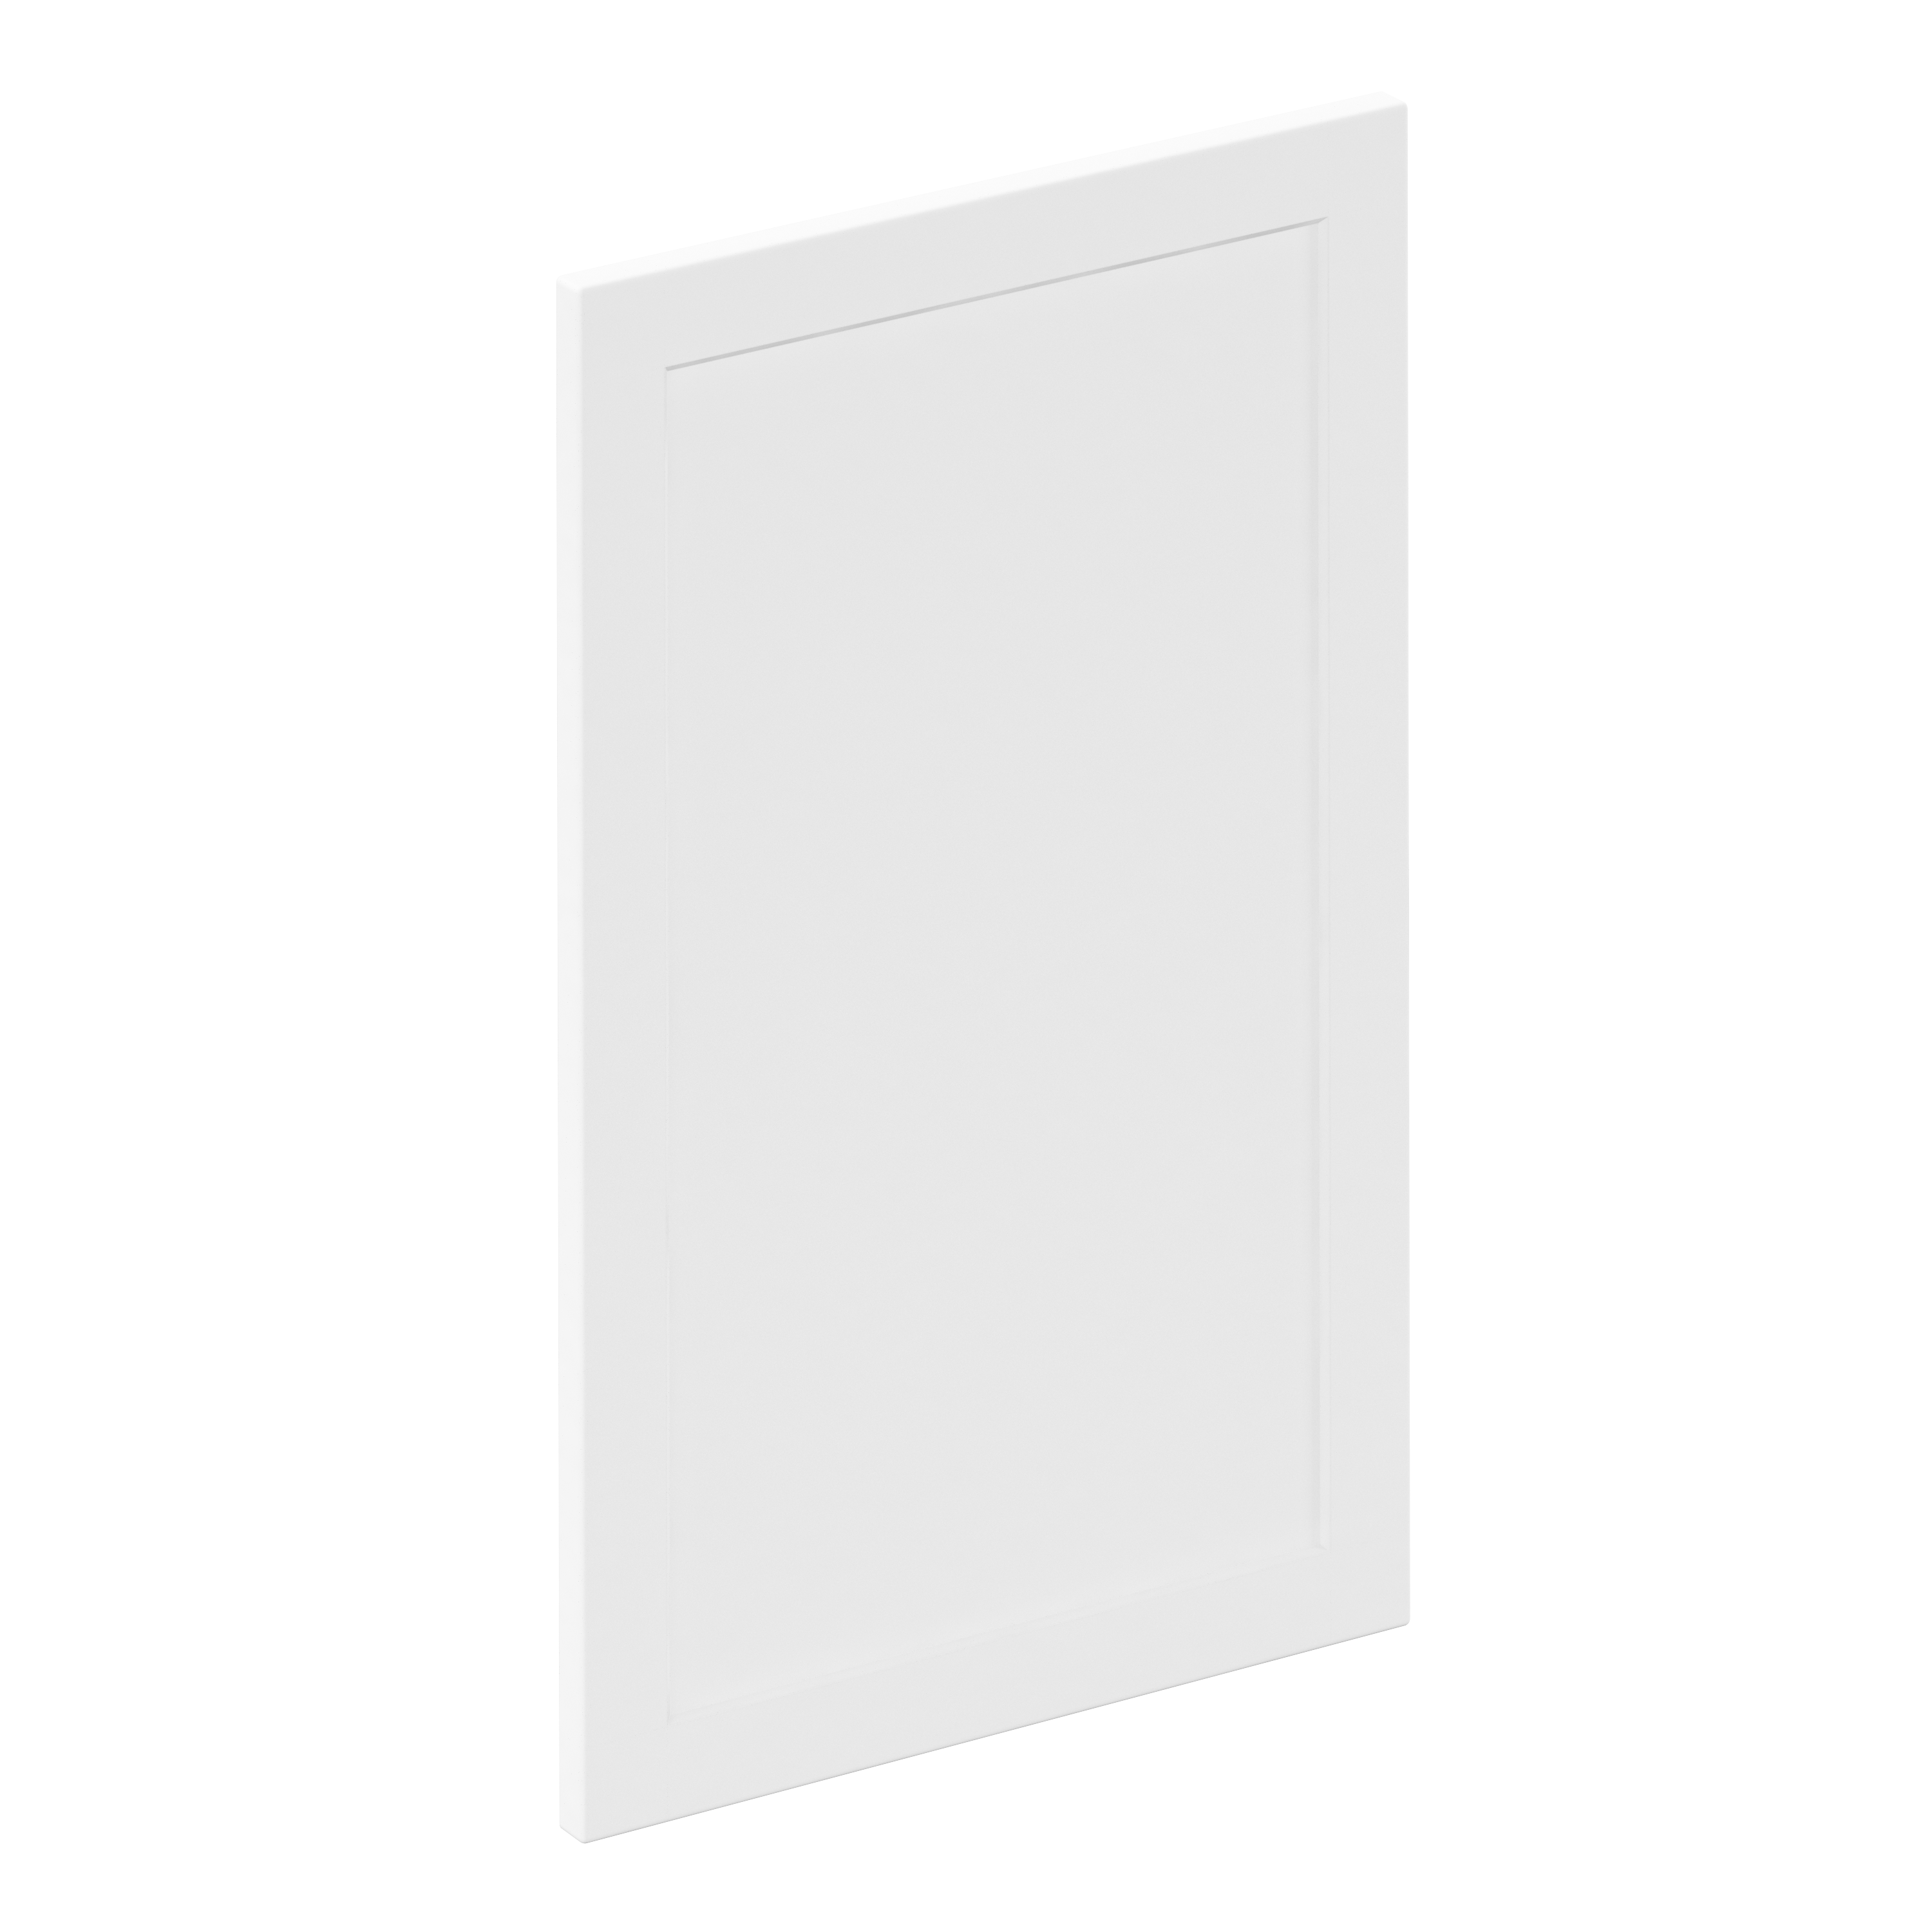 Puerta para mueble de cocina newport blanco mate h 64 x l 40 cm